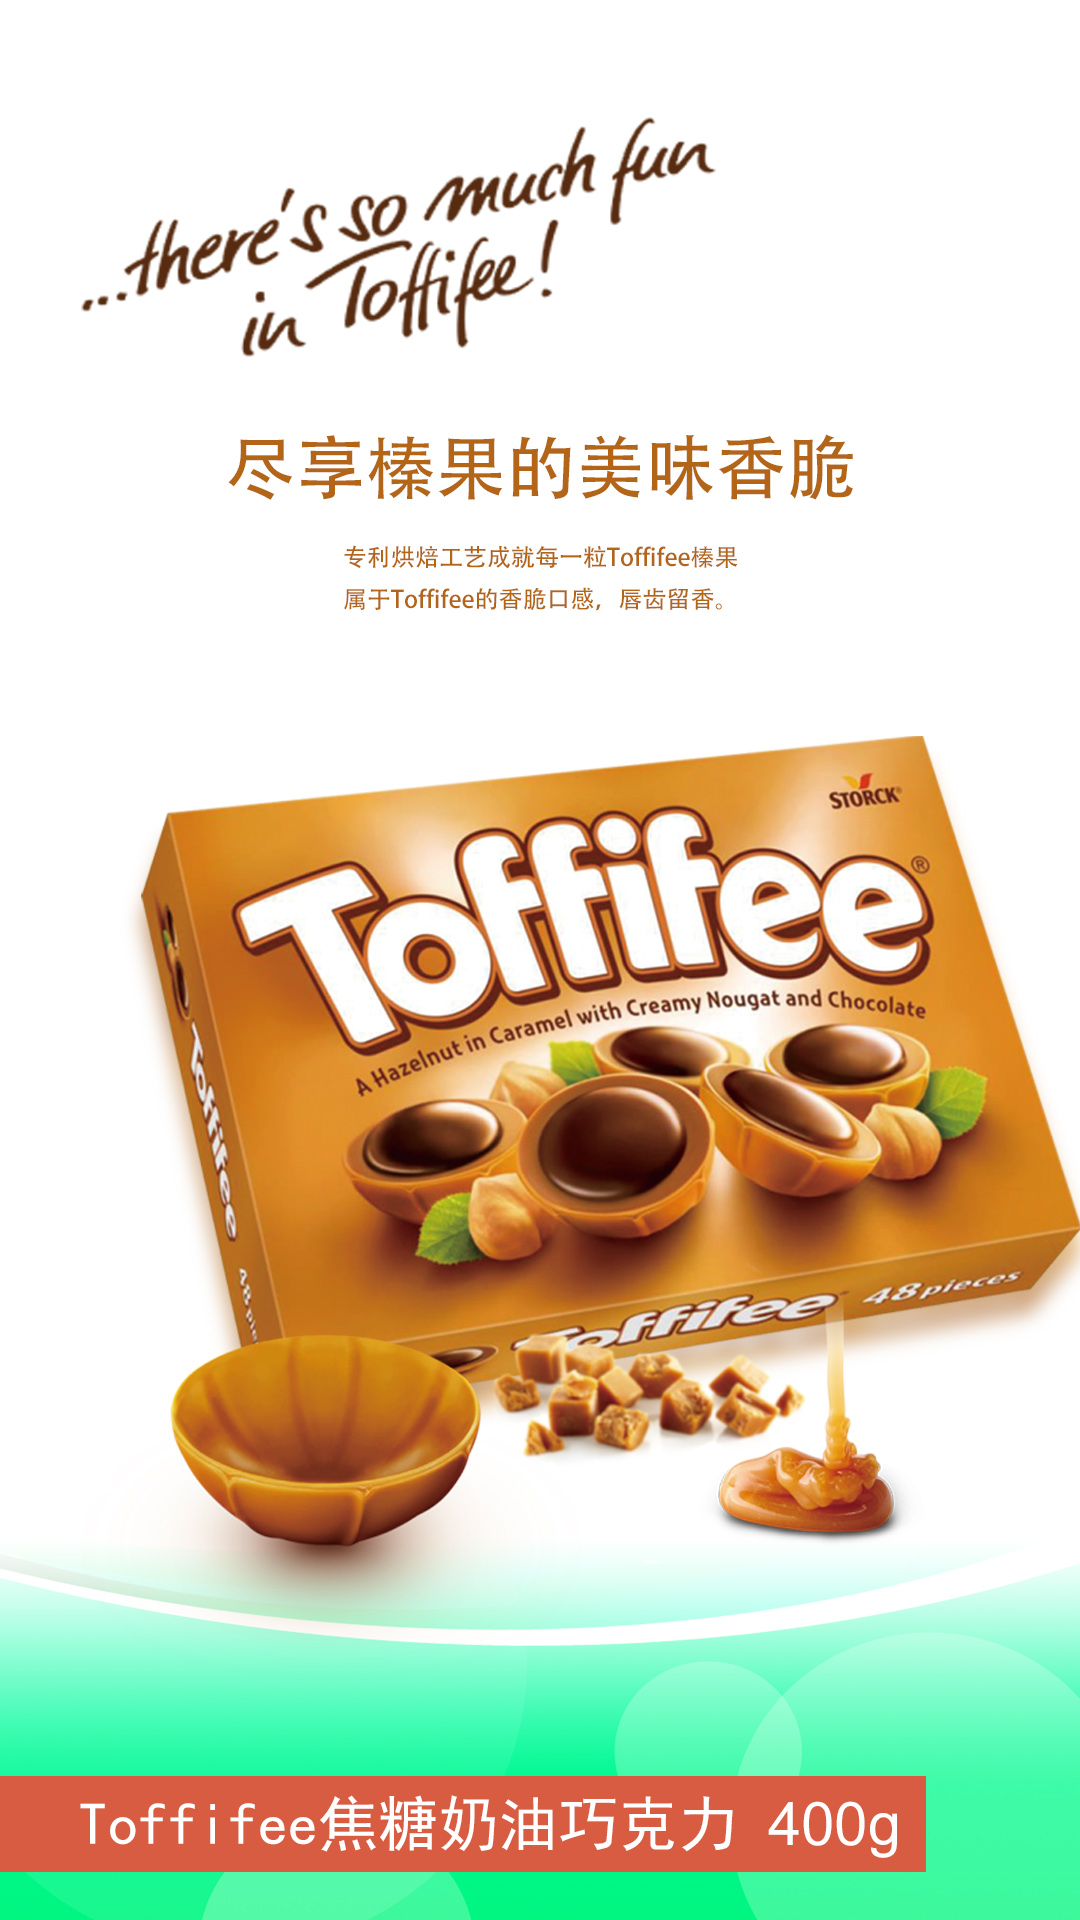 Toffifee hazelnut Caramel flavored chocolate